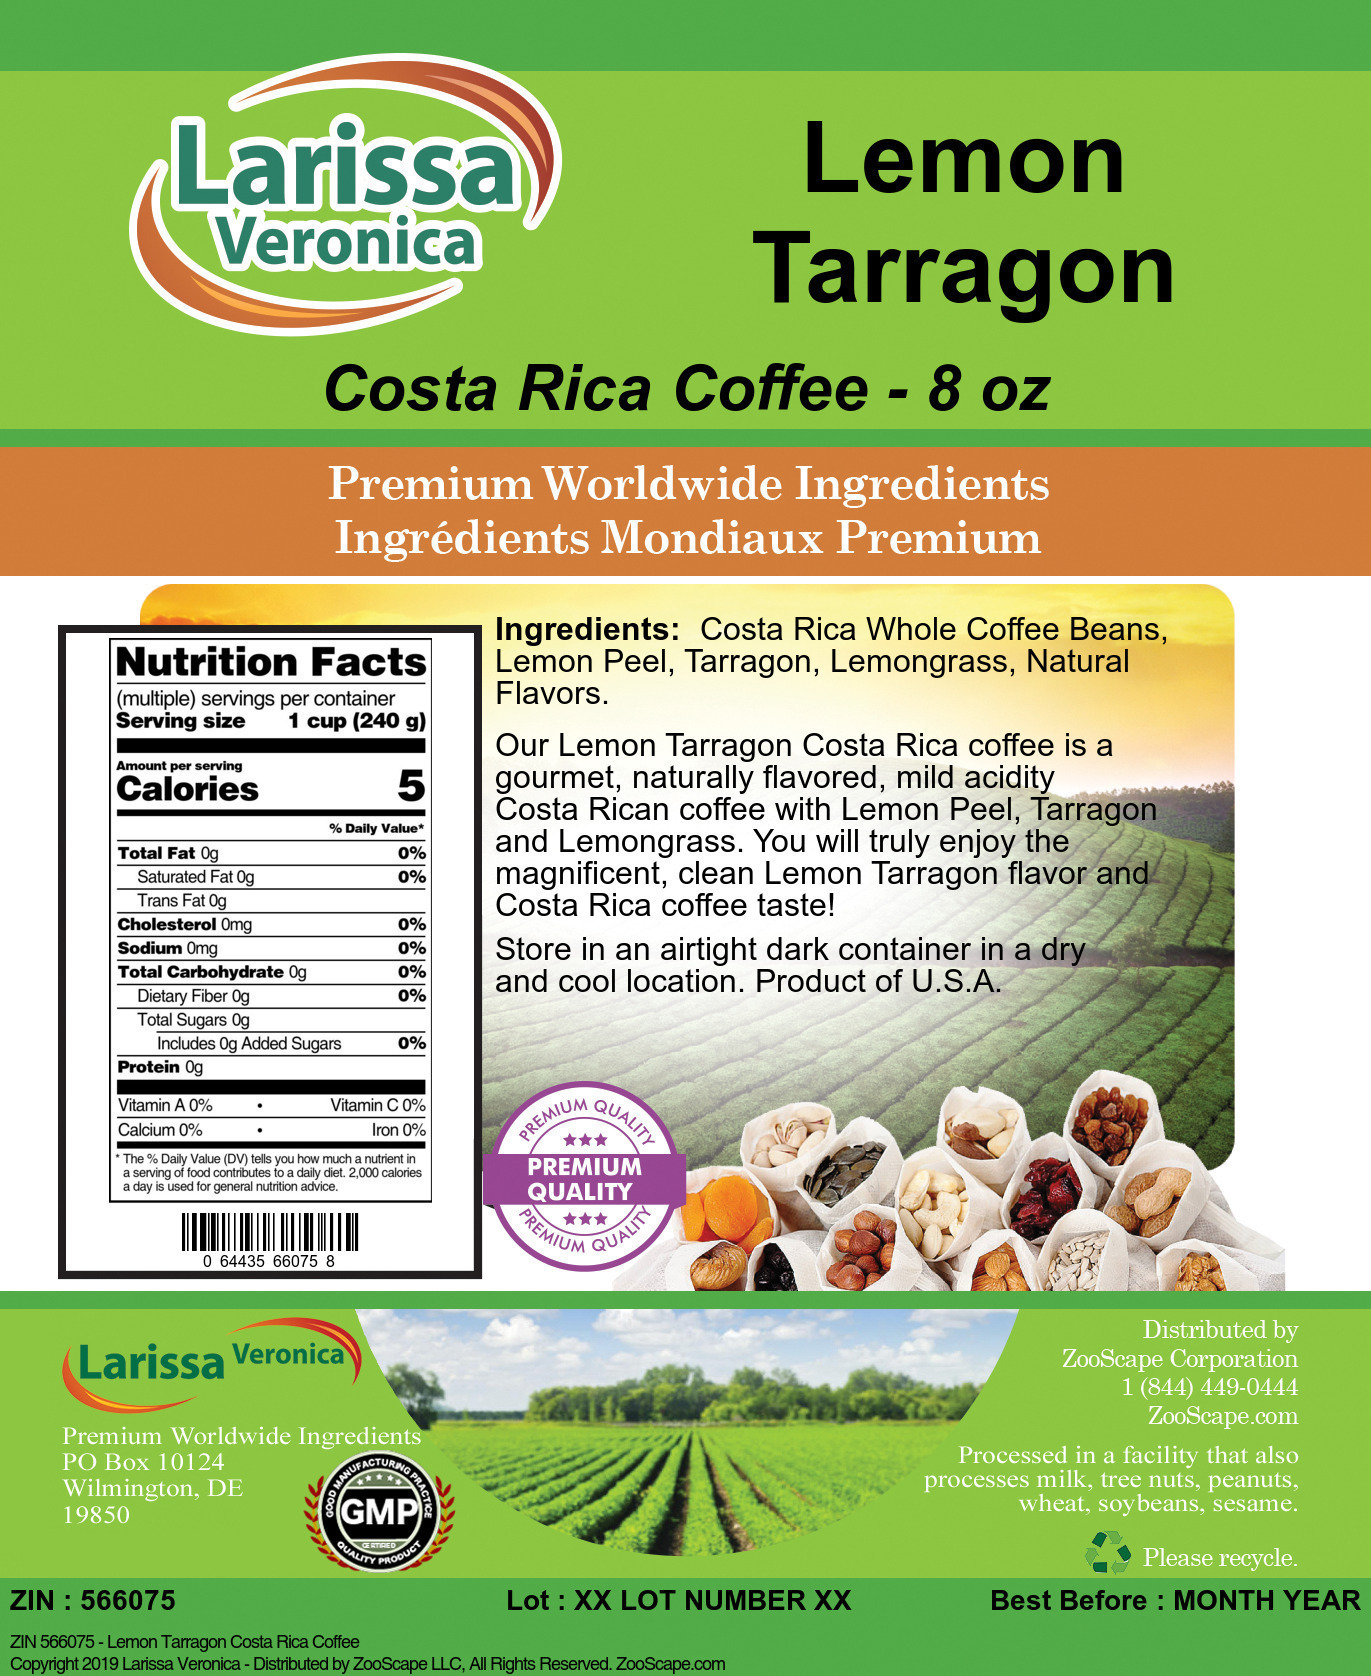 Lemon Tarragon Costa Rica Coffee - Label